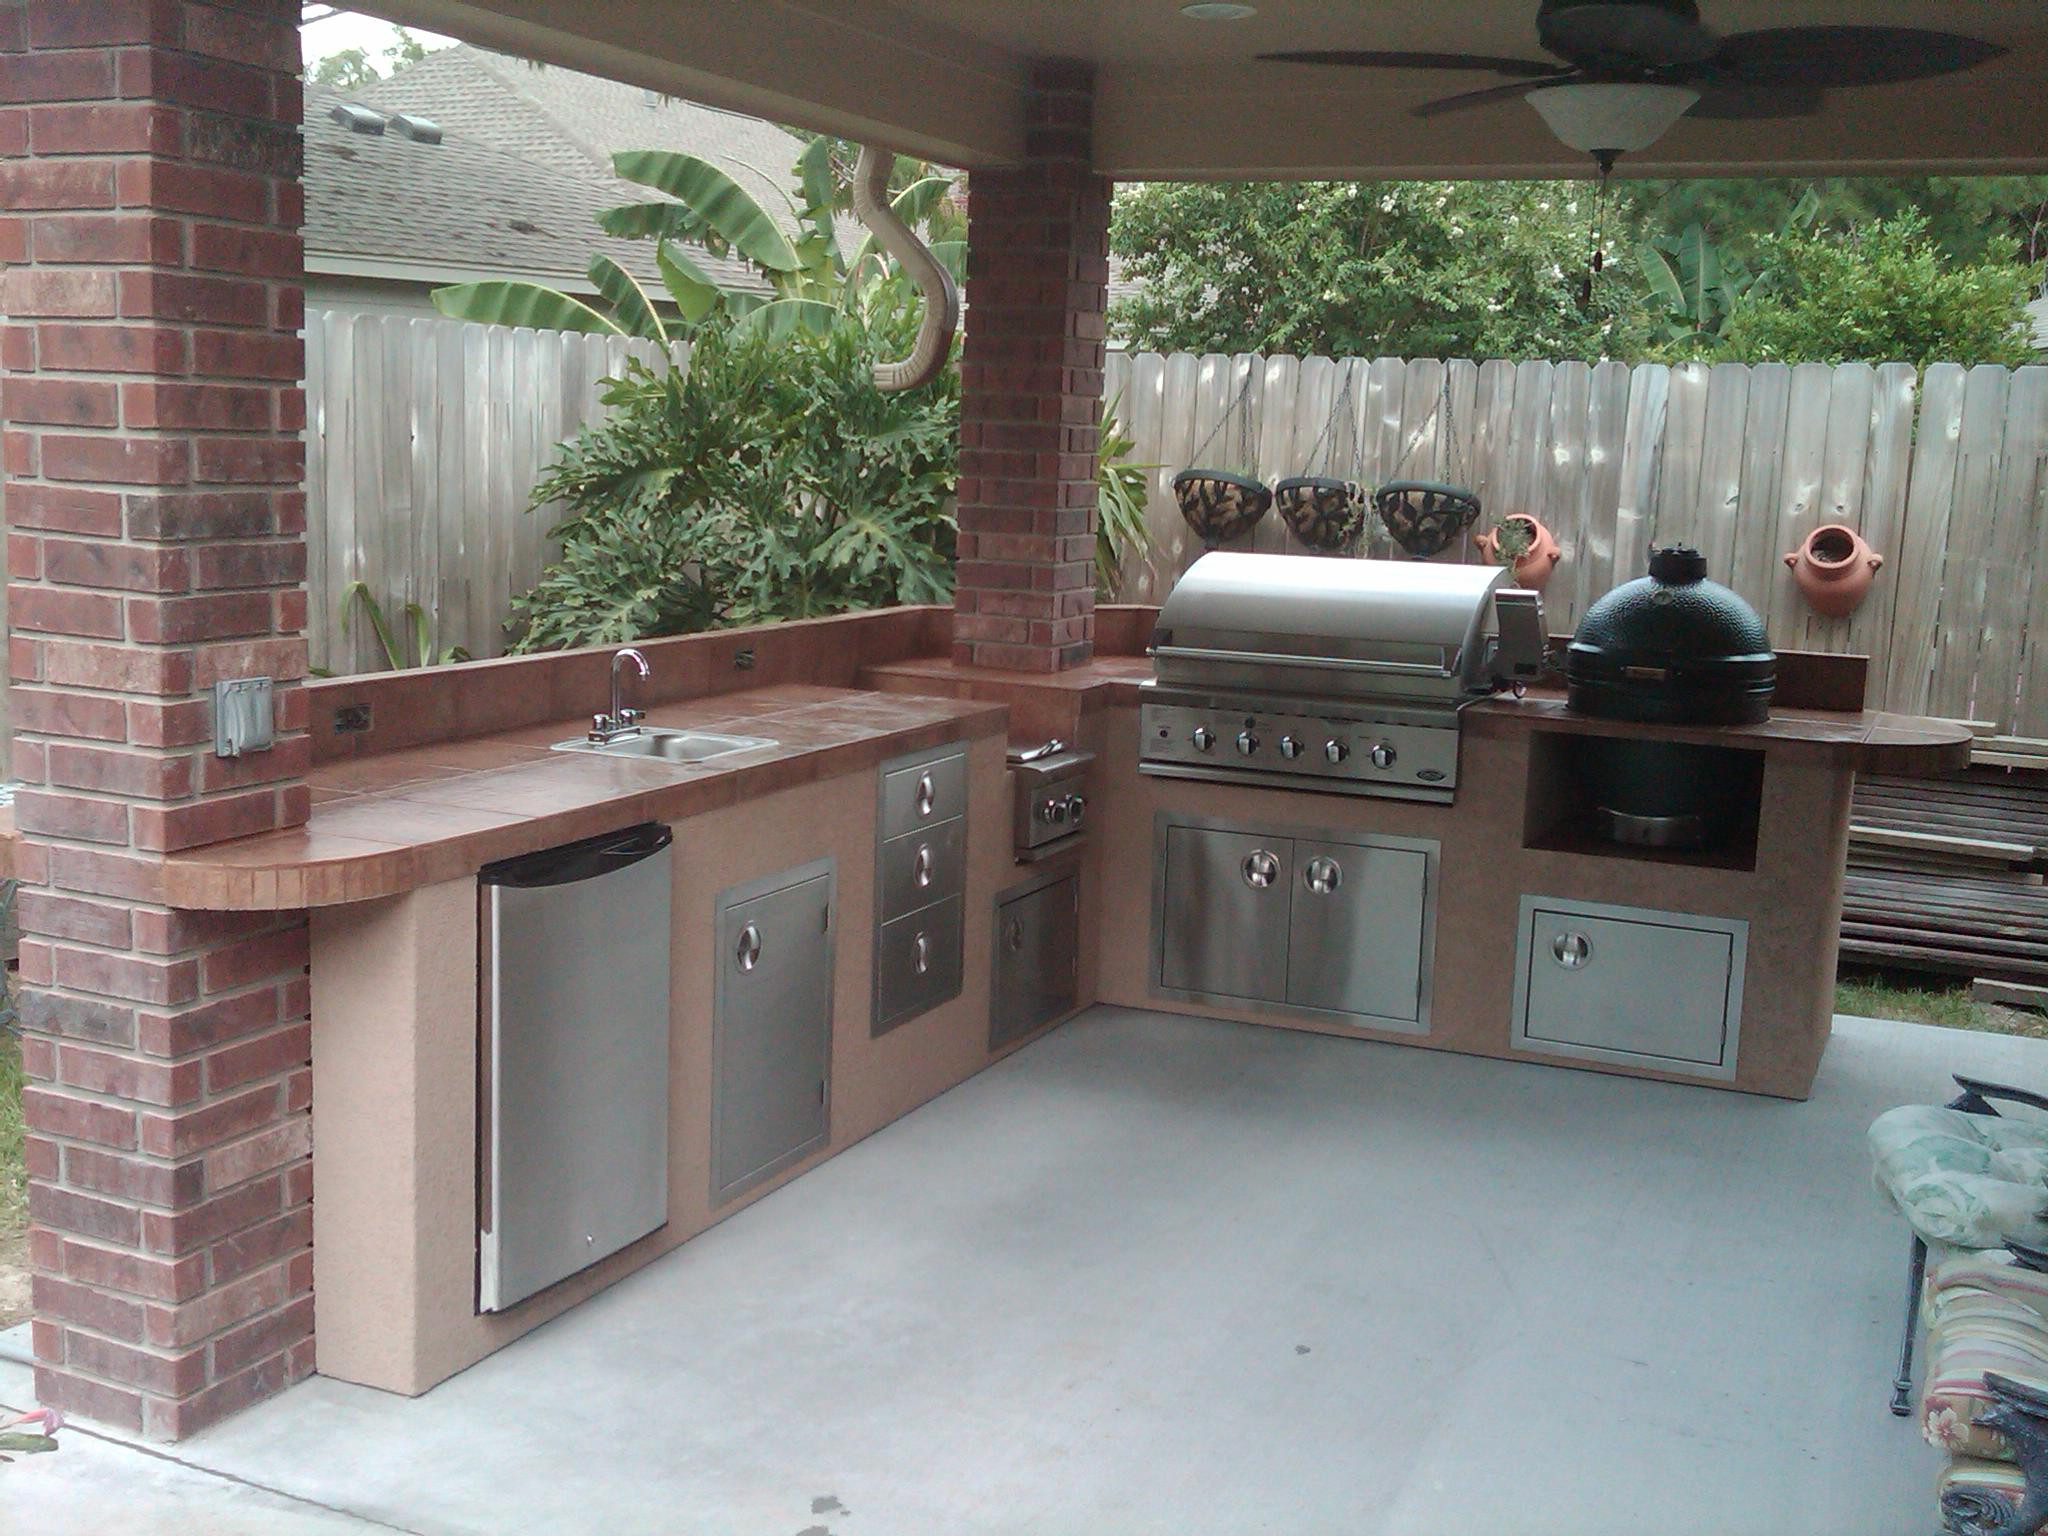 Gas Grill For Outdoor Kitchen
 Outdoor Kitchen Deep Fryer Built In